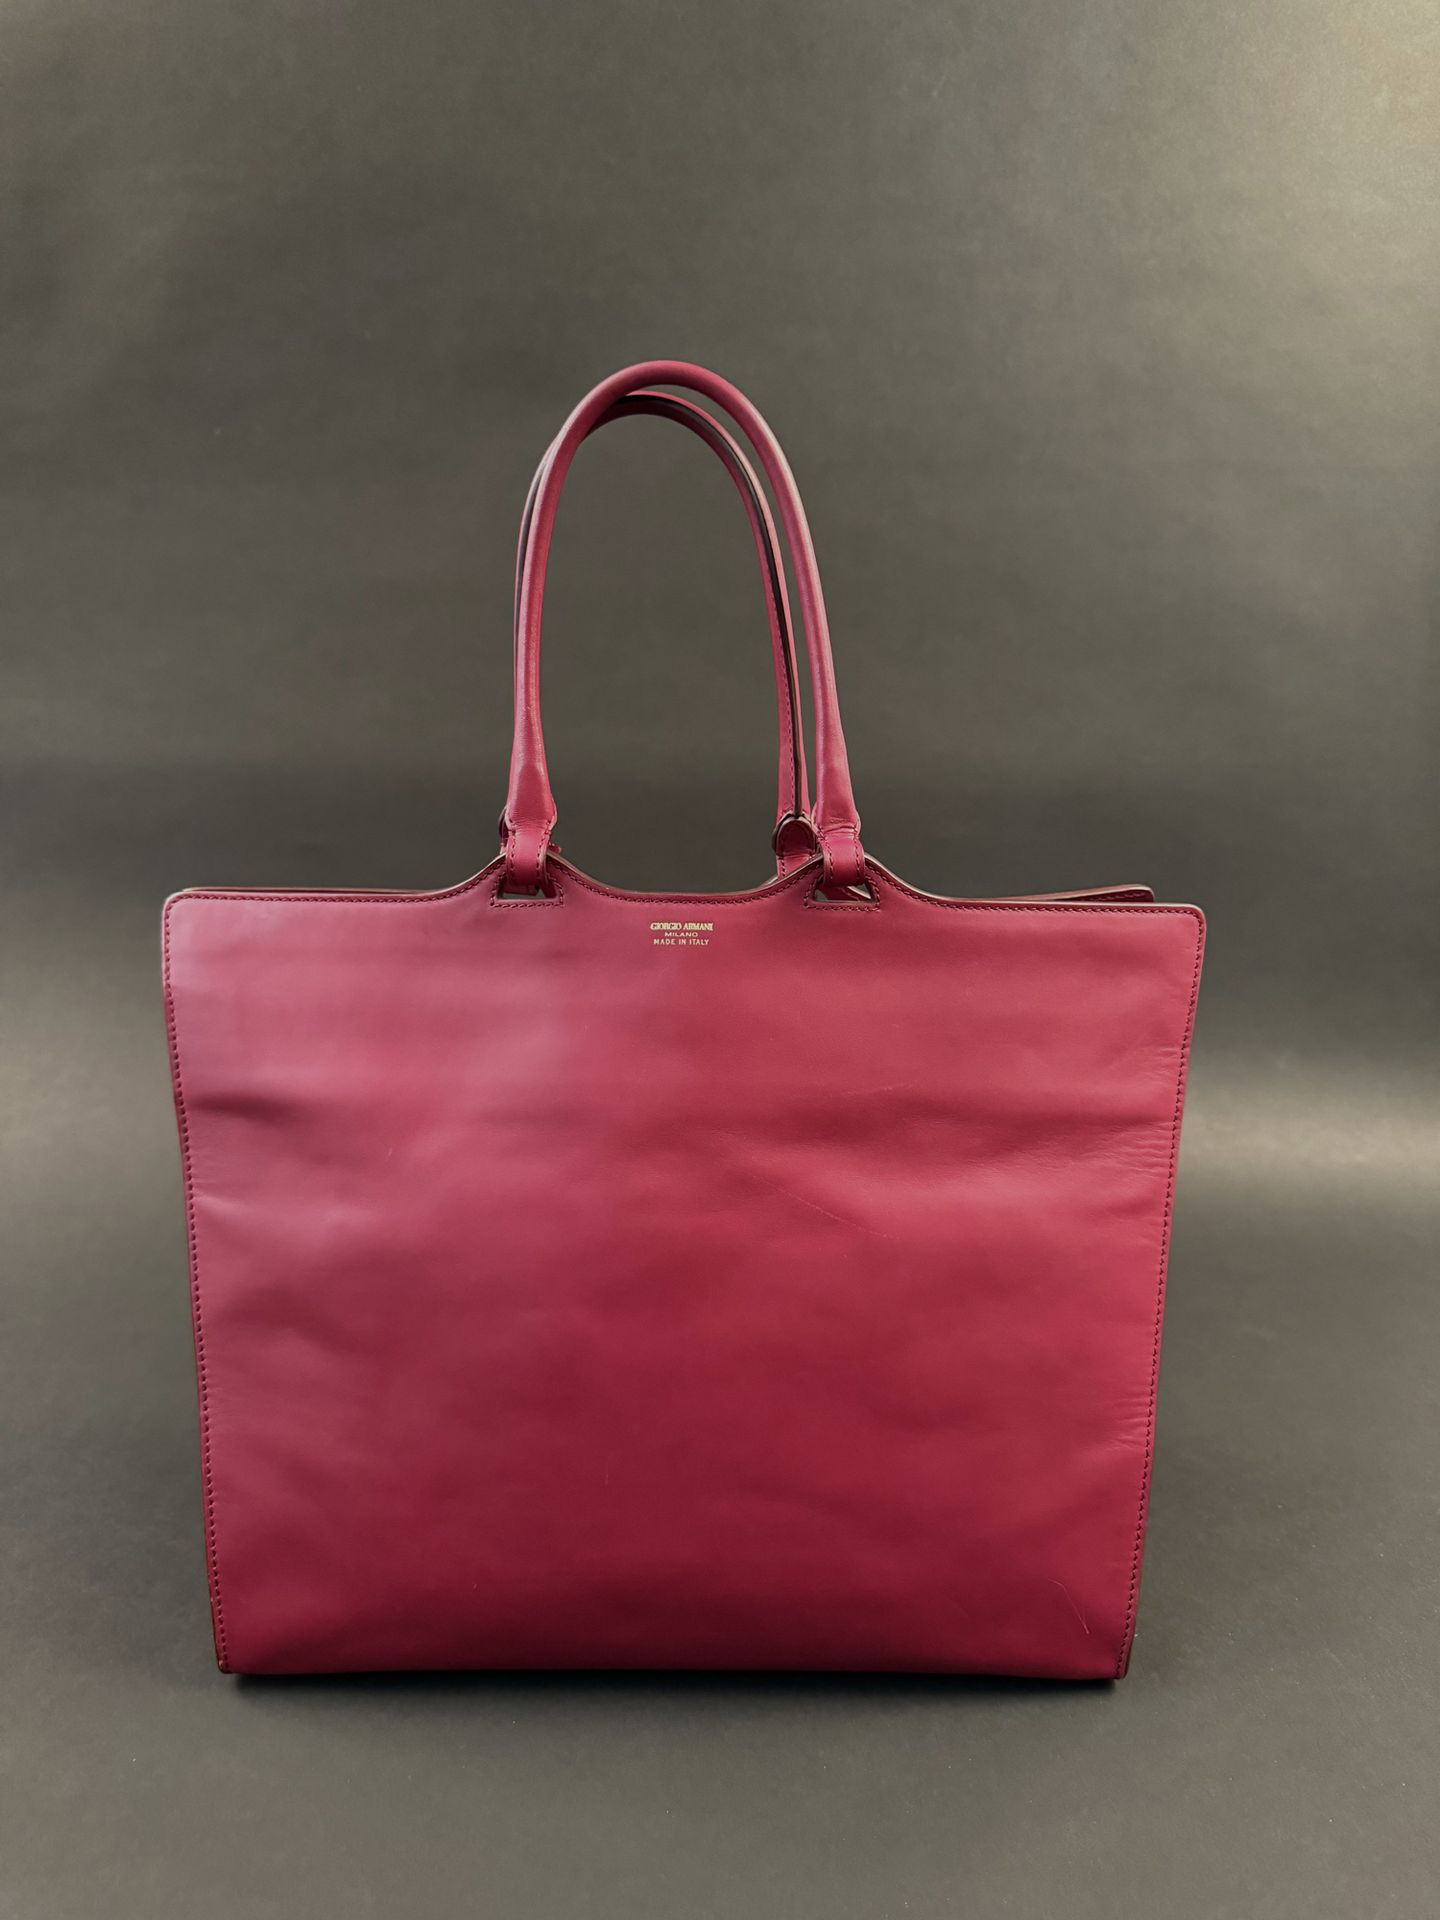 Null GIORGIO ARMANI, burgundy smooth leather handbag, In its pouch, Good conditi&hellip;